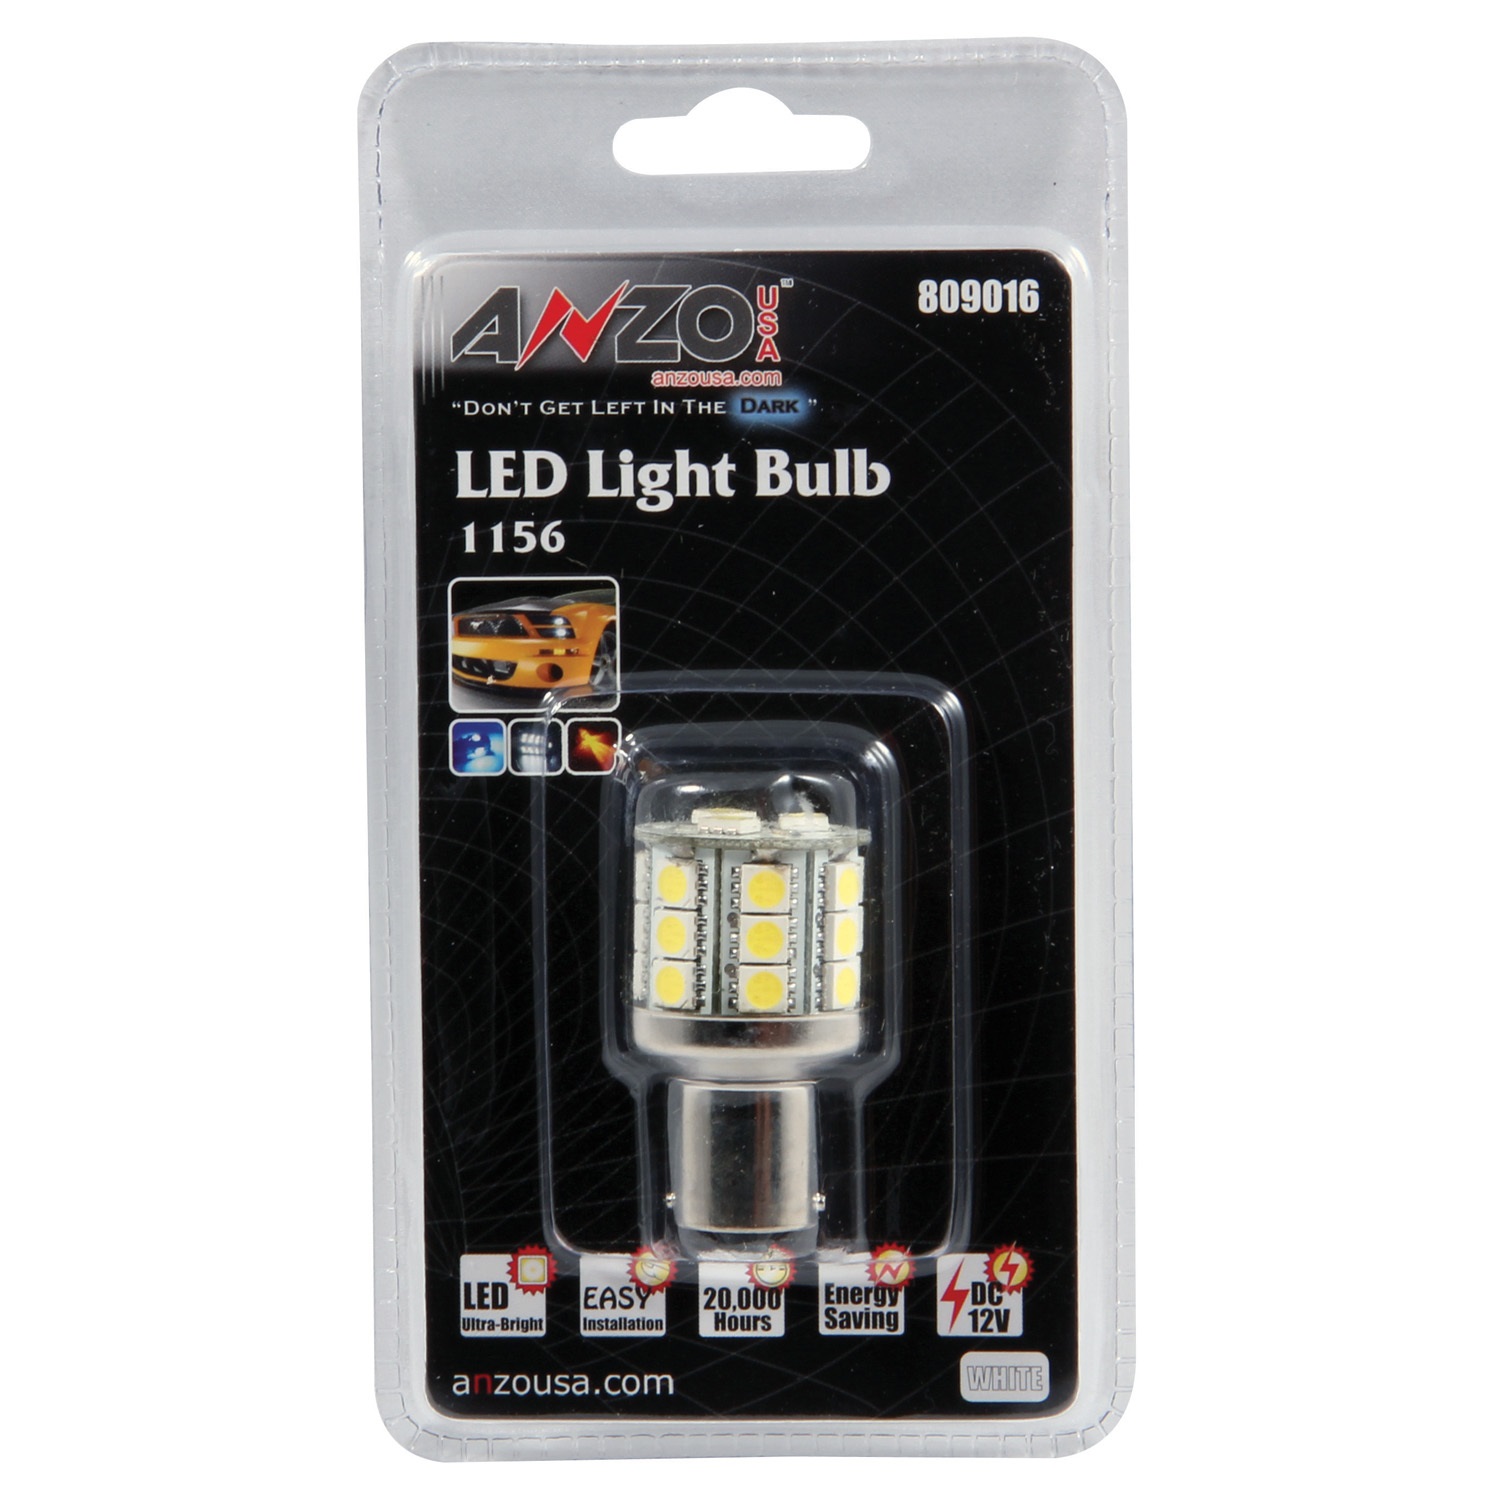 Anzo USA Anzo USA 809016 LED Replacement Bulb